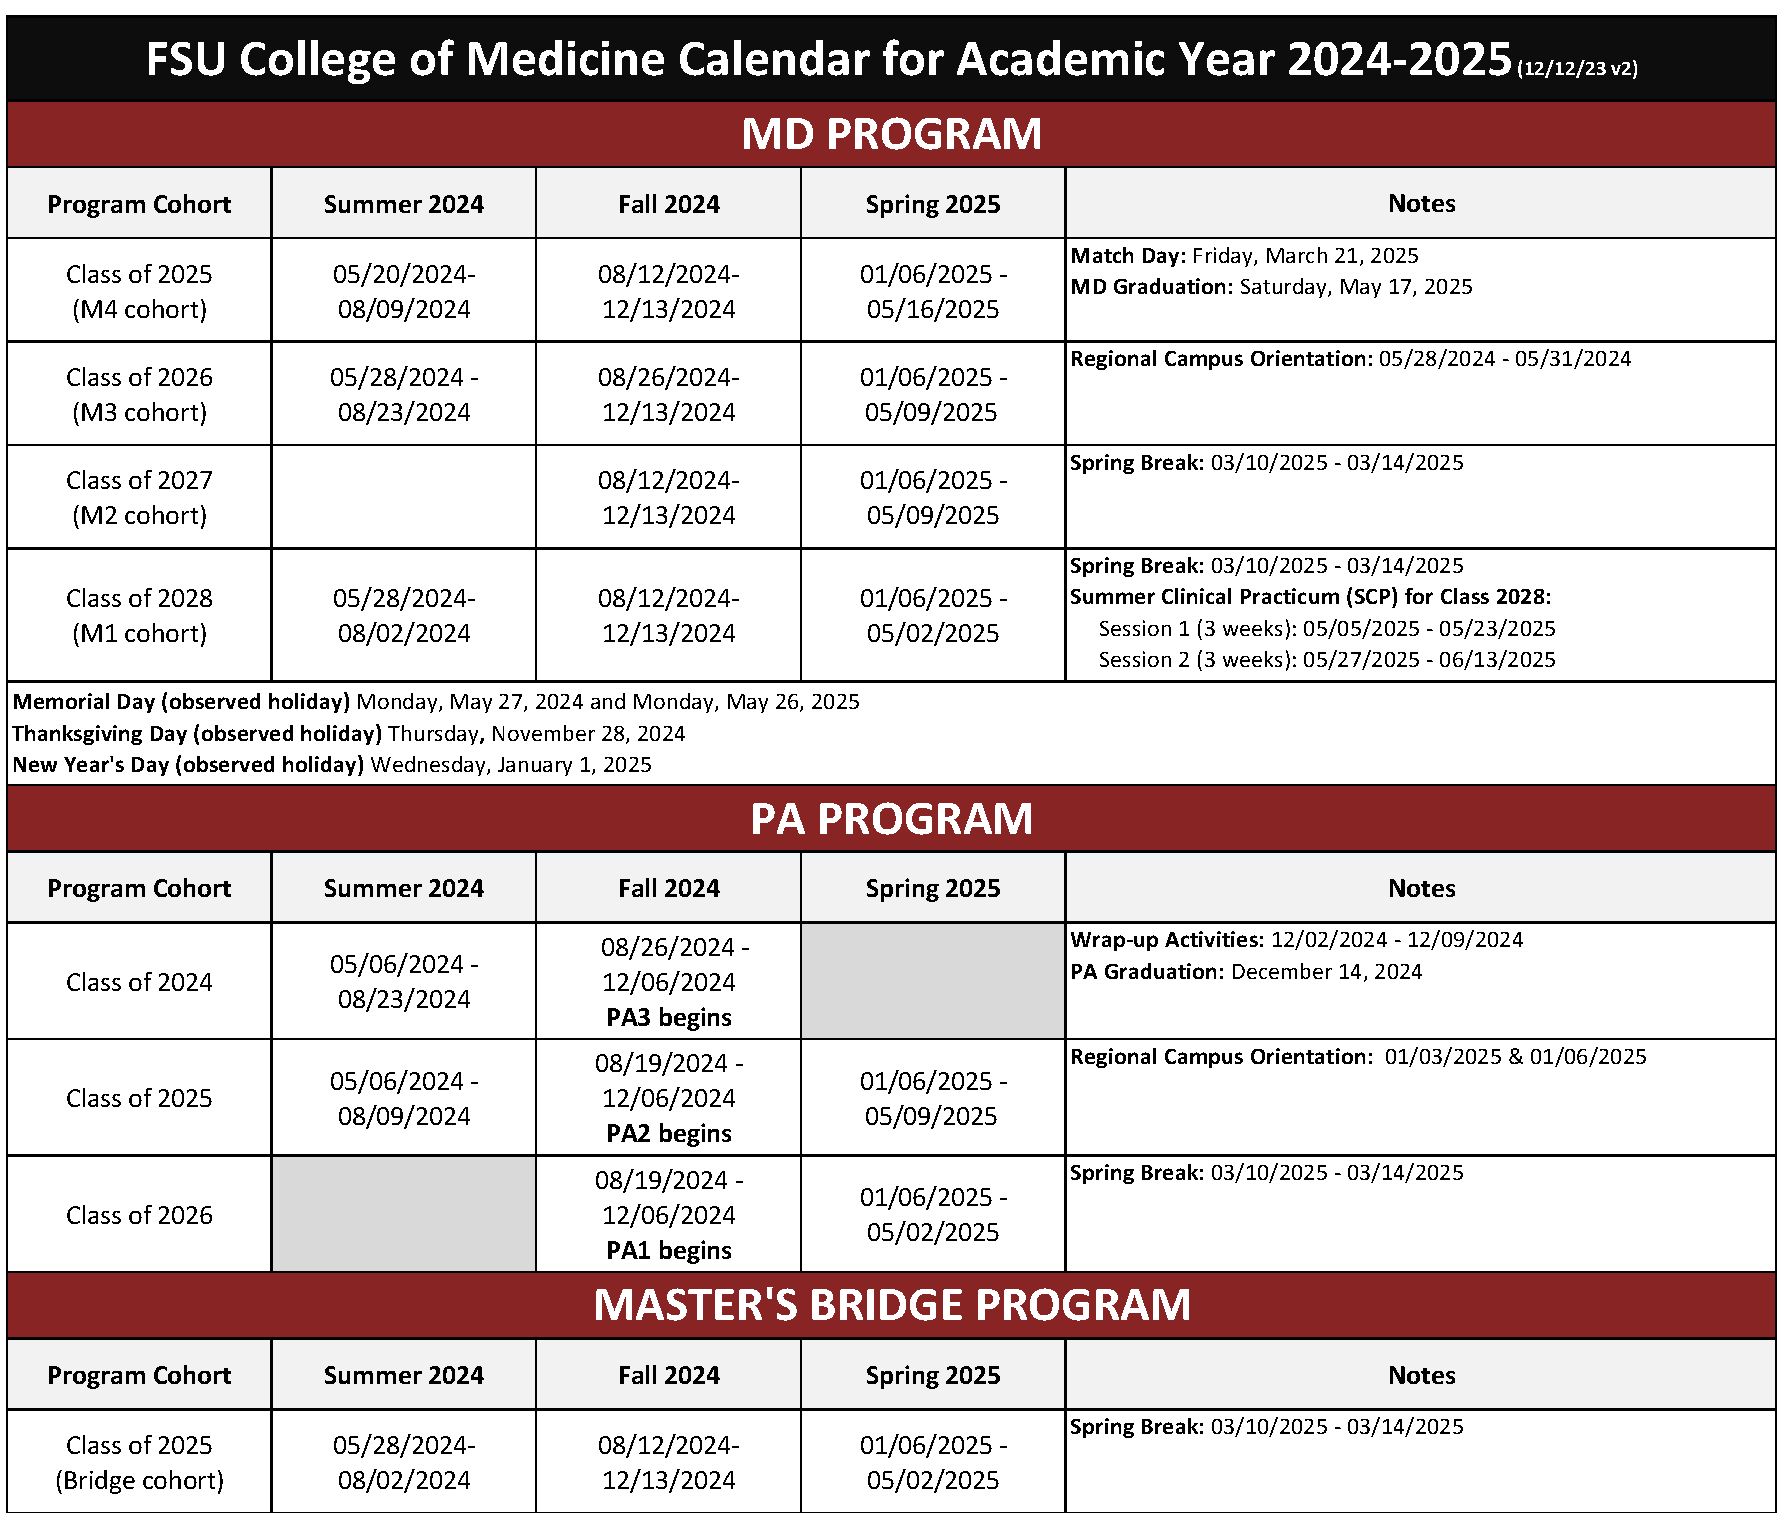 AY2024-2025 Academic Program Calendars v2 IMAGE